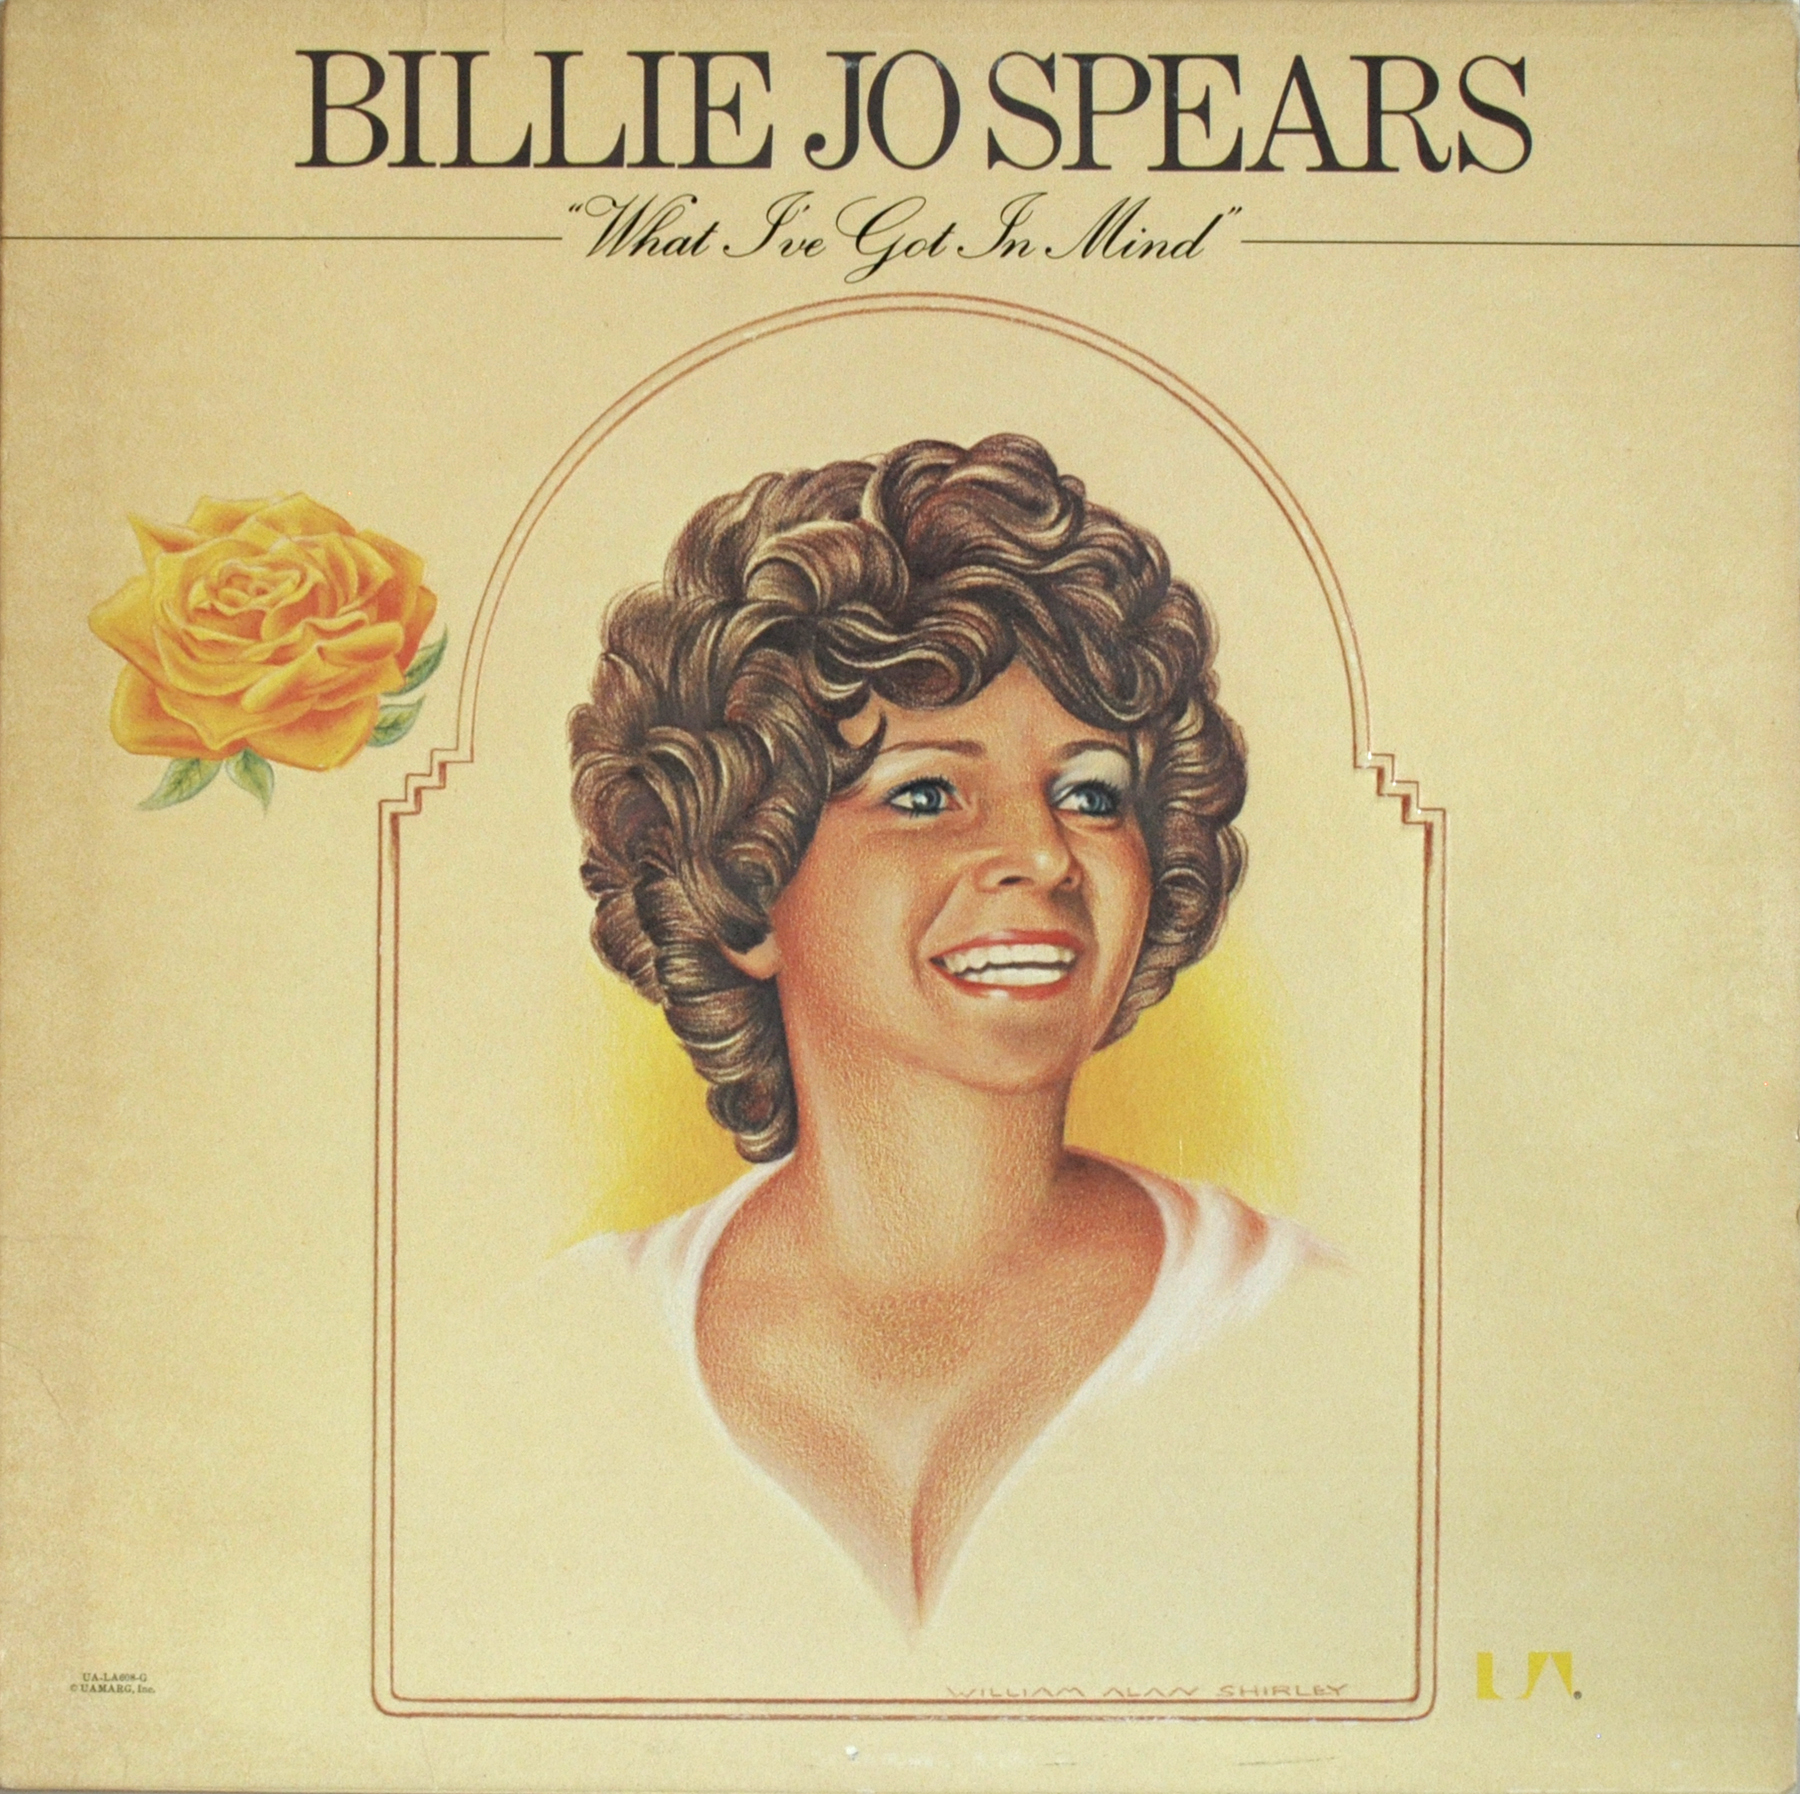 Acheter disque vinyle SPEARS Billie Jo What I've got in  mind a vendre